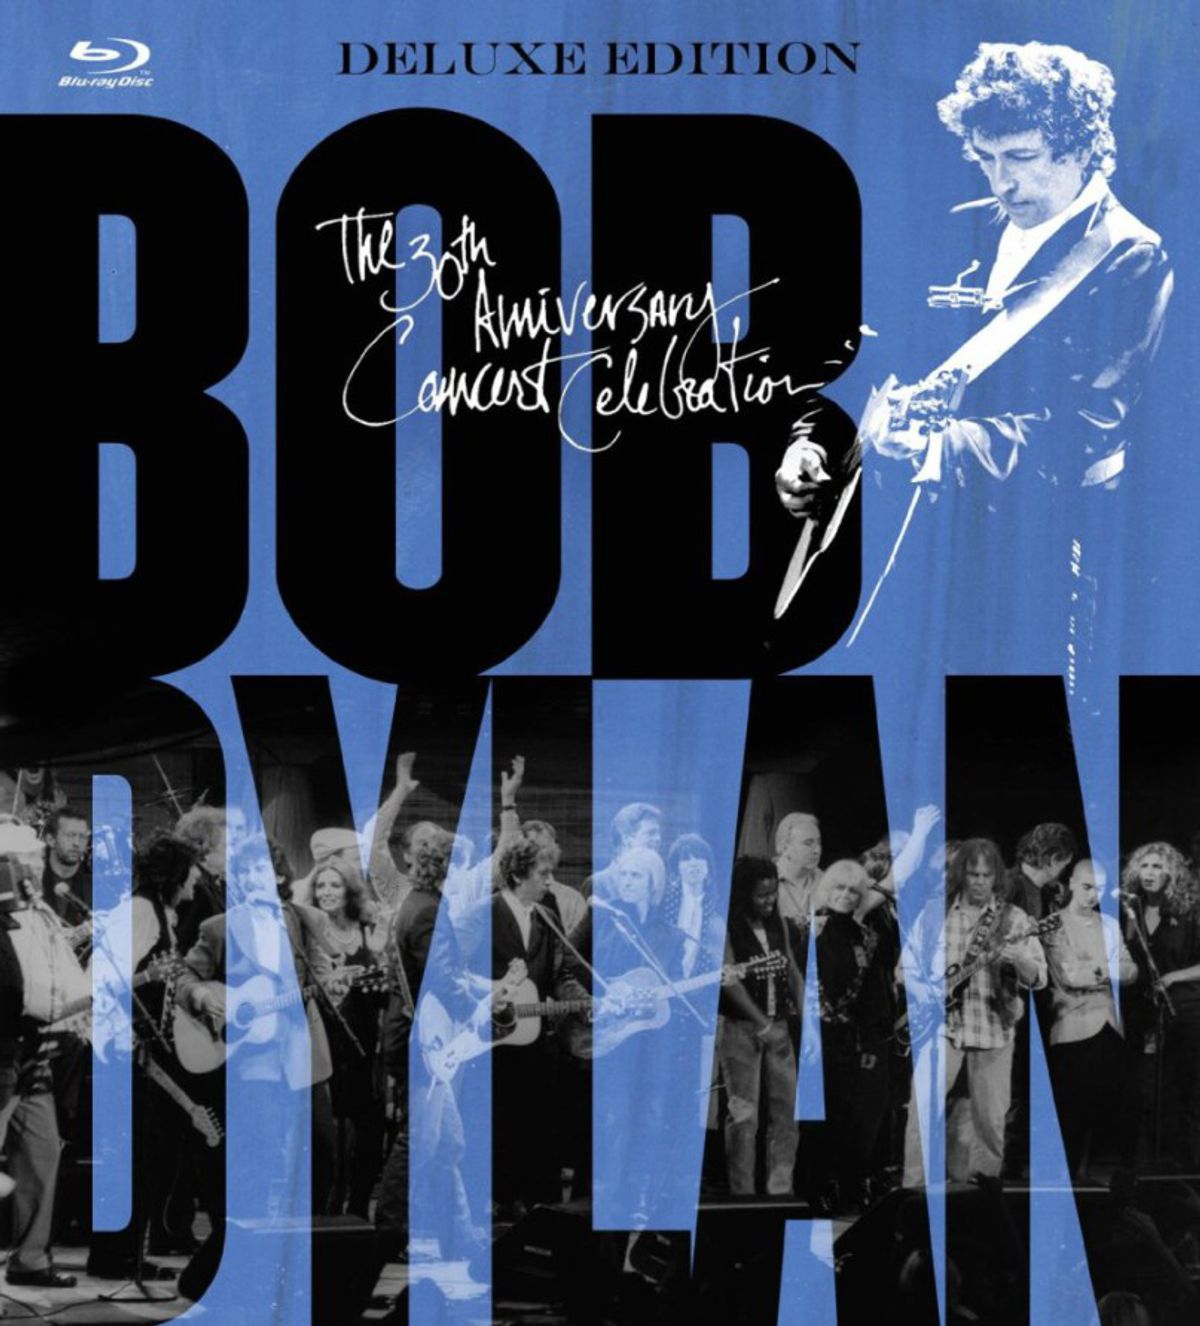 Bob Dylan - 'The 30th Anniversary Concert Celebration'